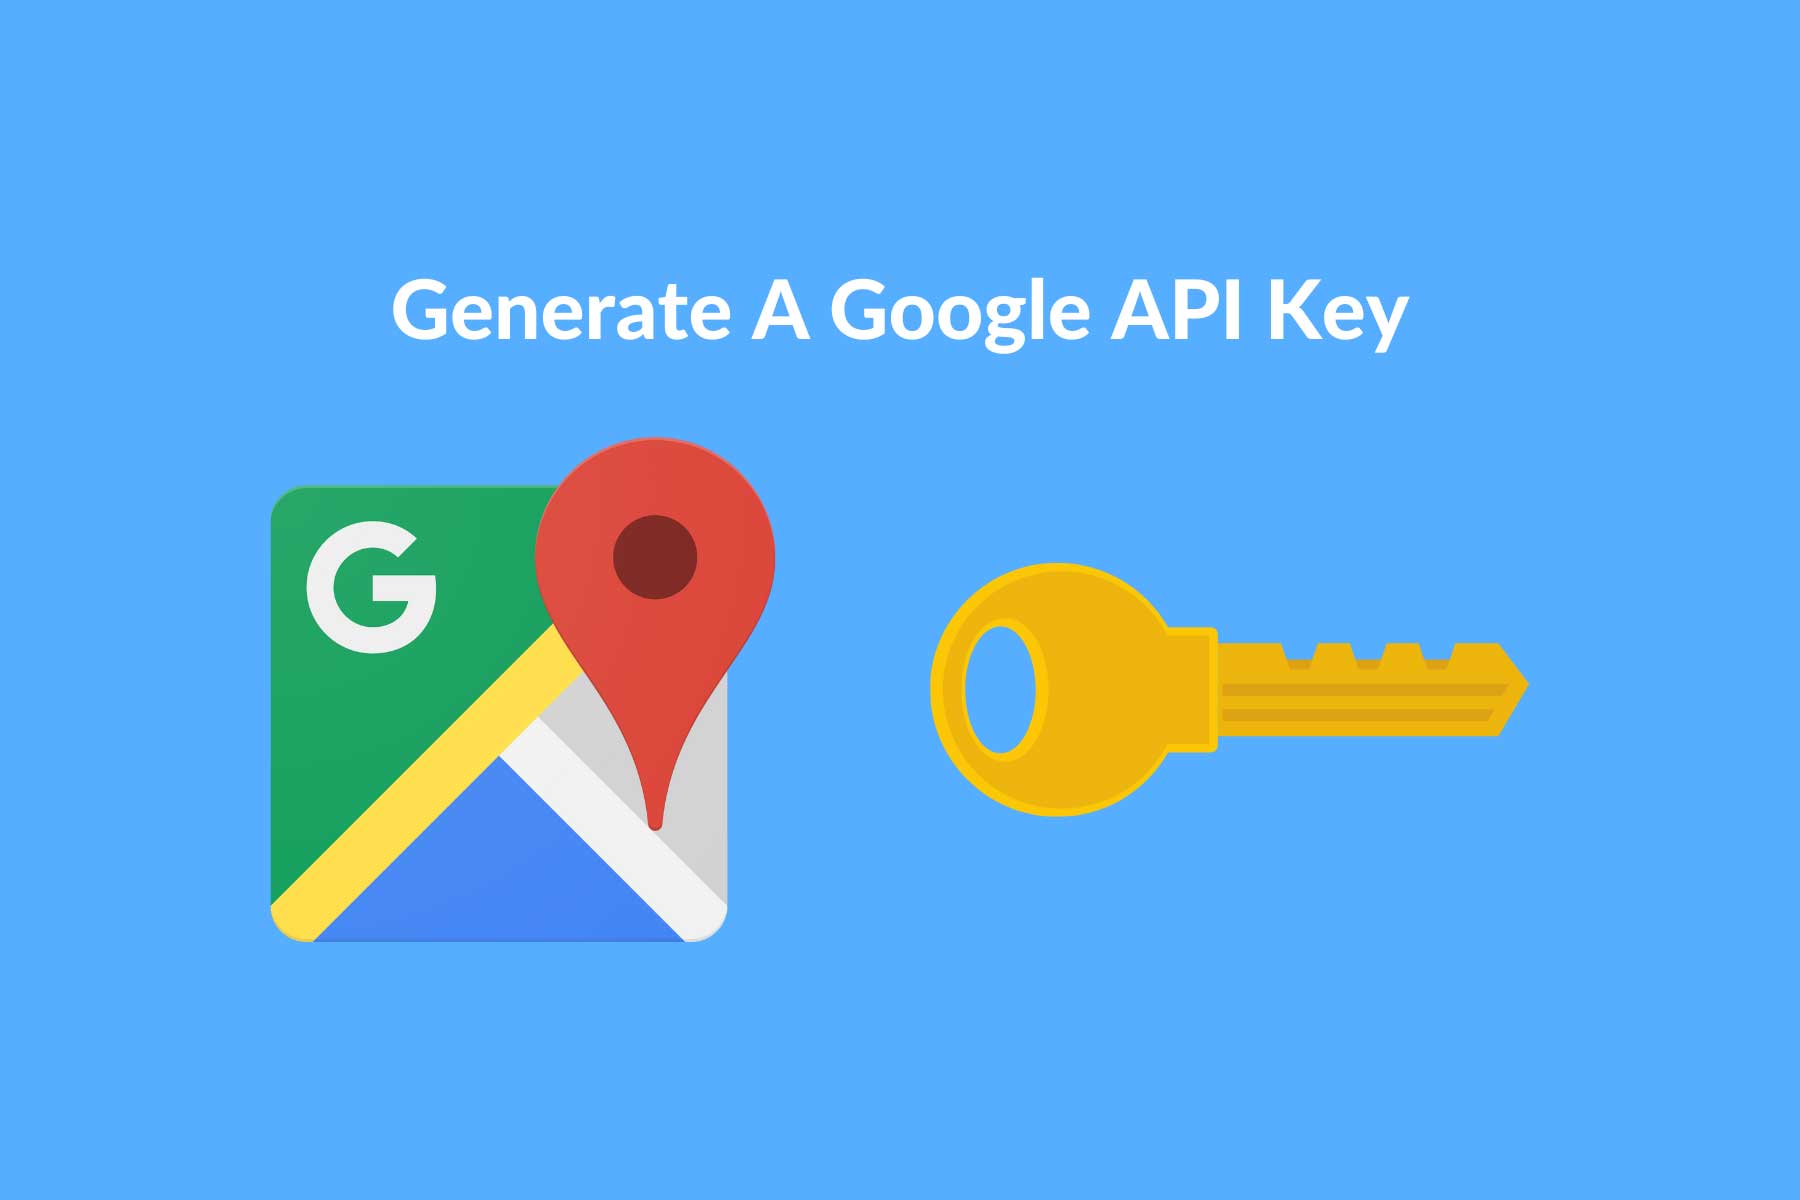 Generate a Google API Key